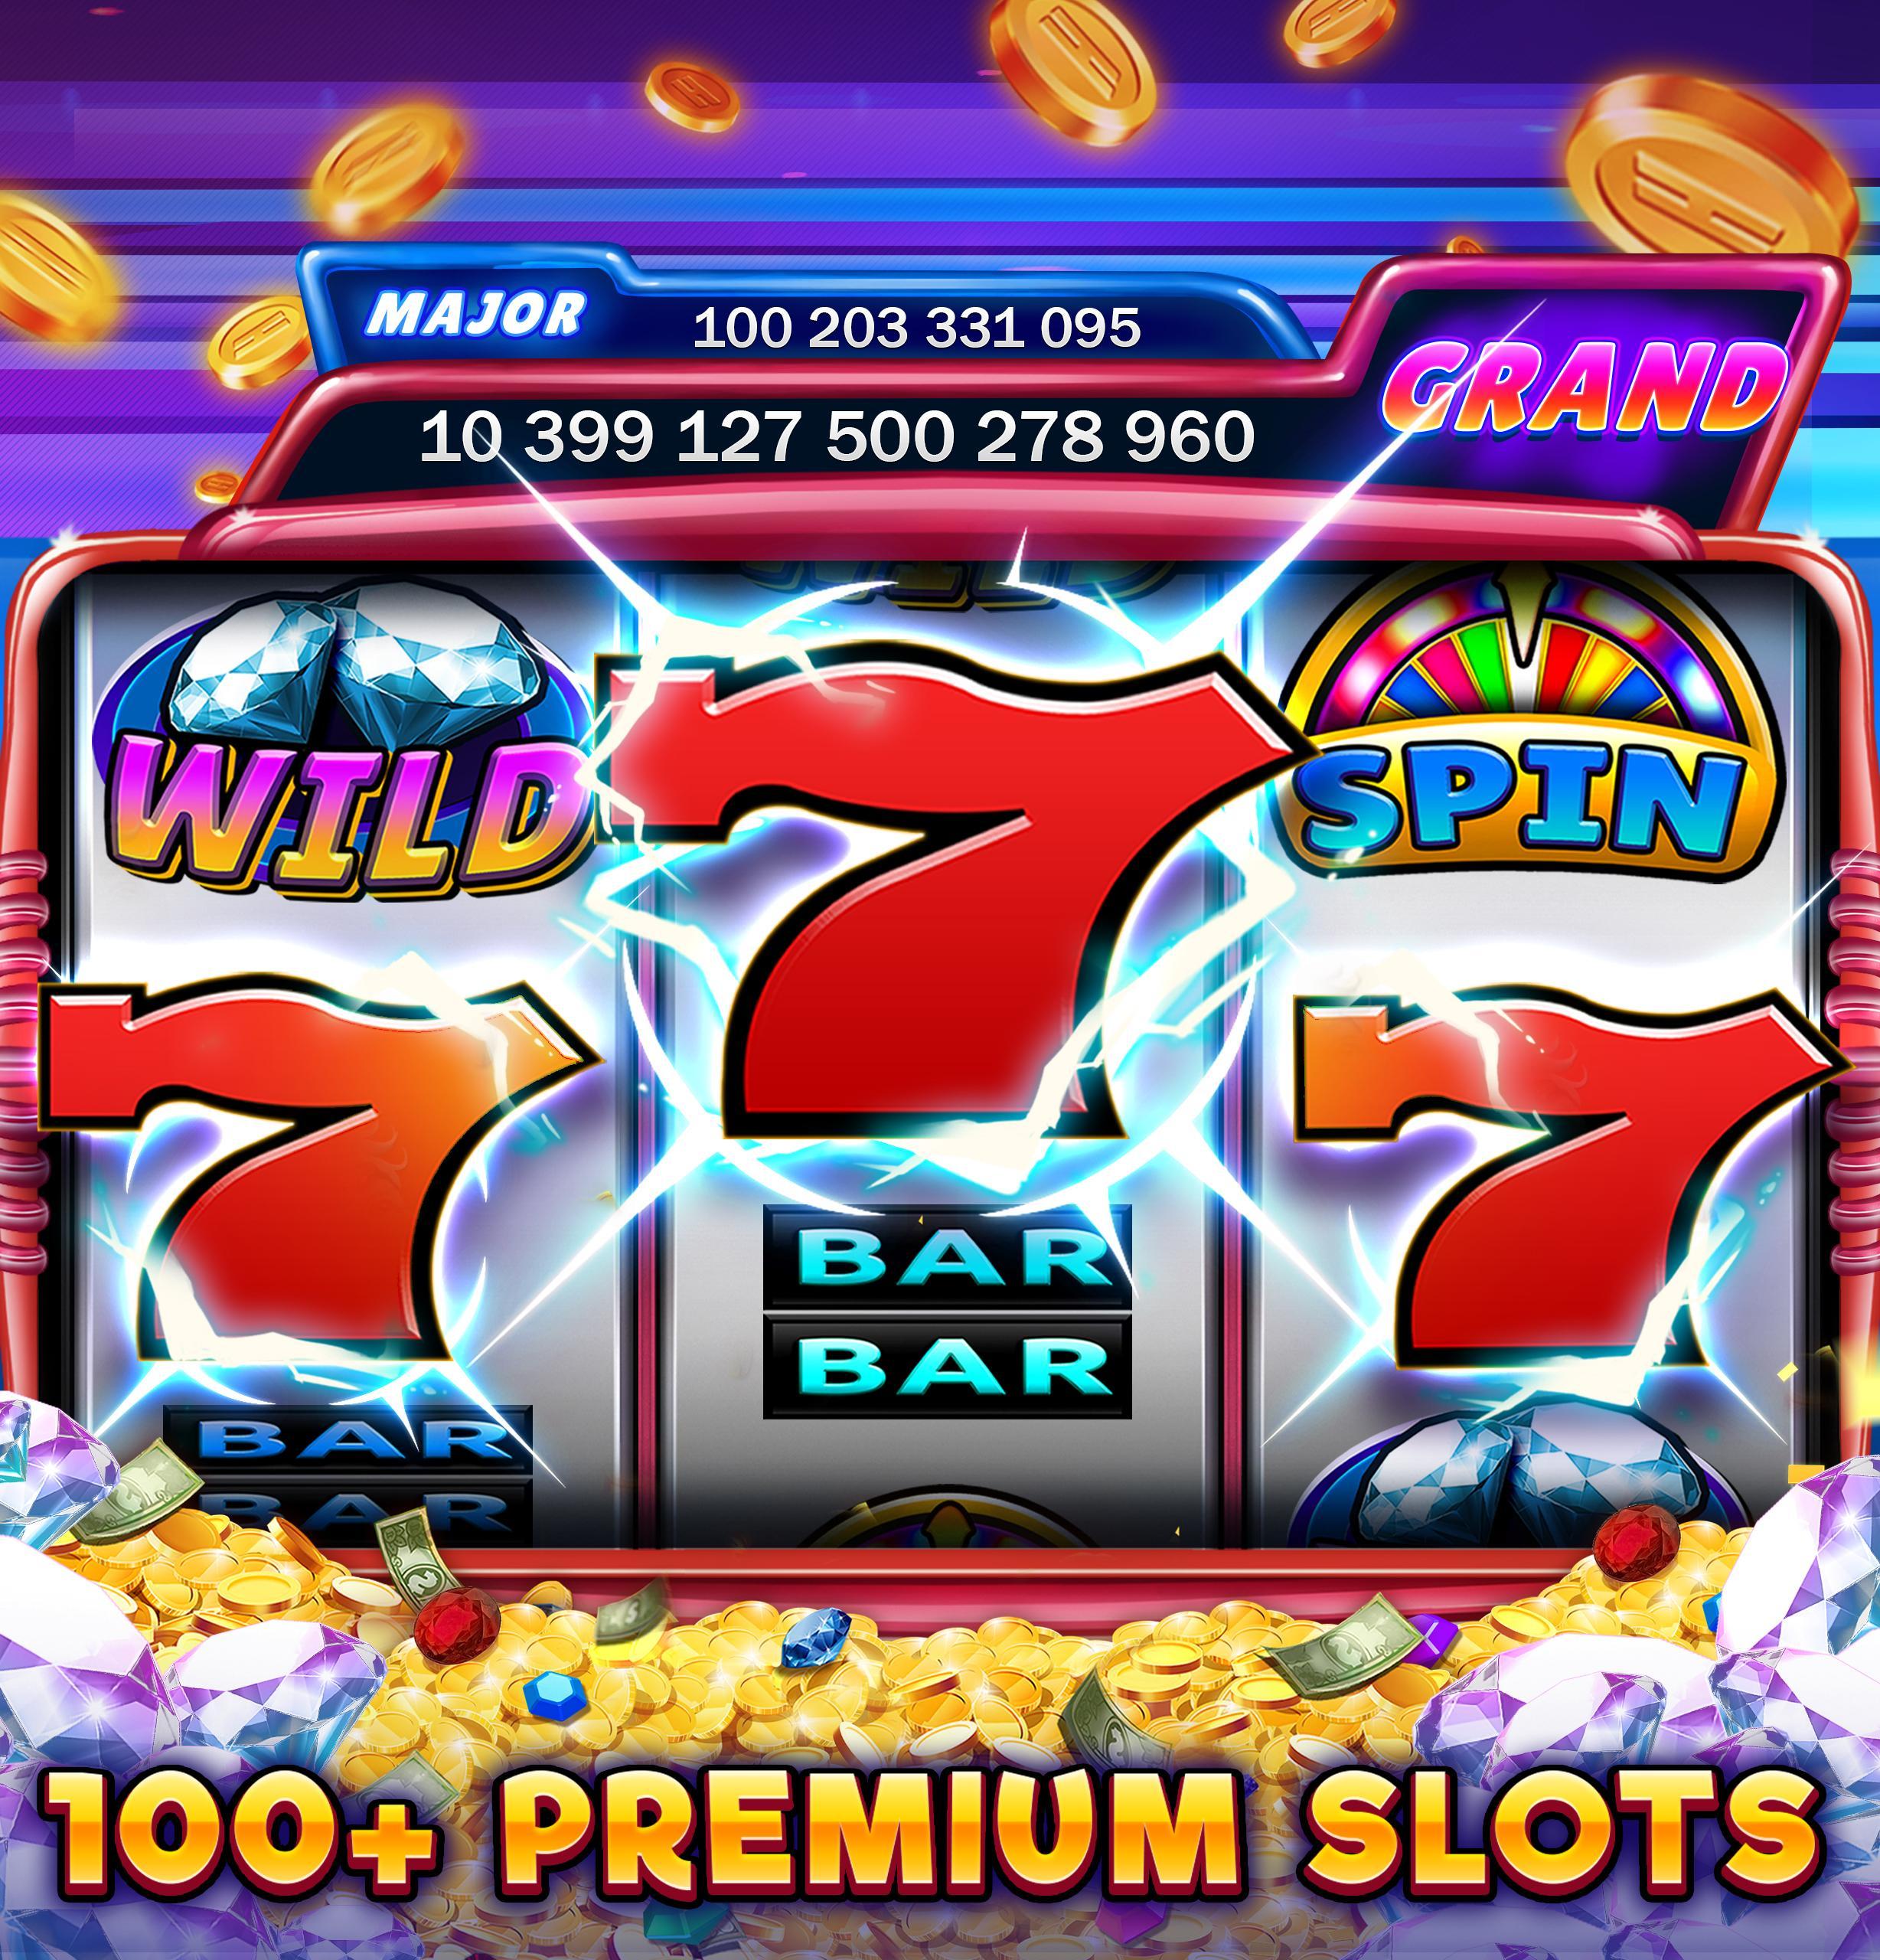 Billionaire casino game